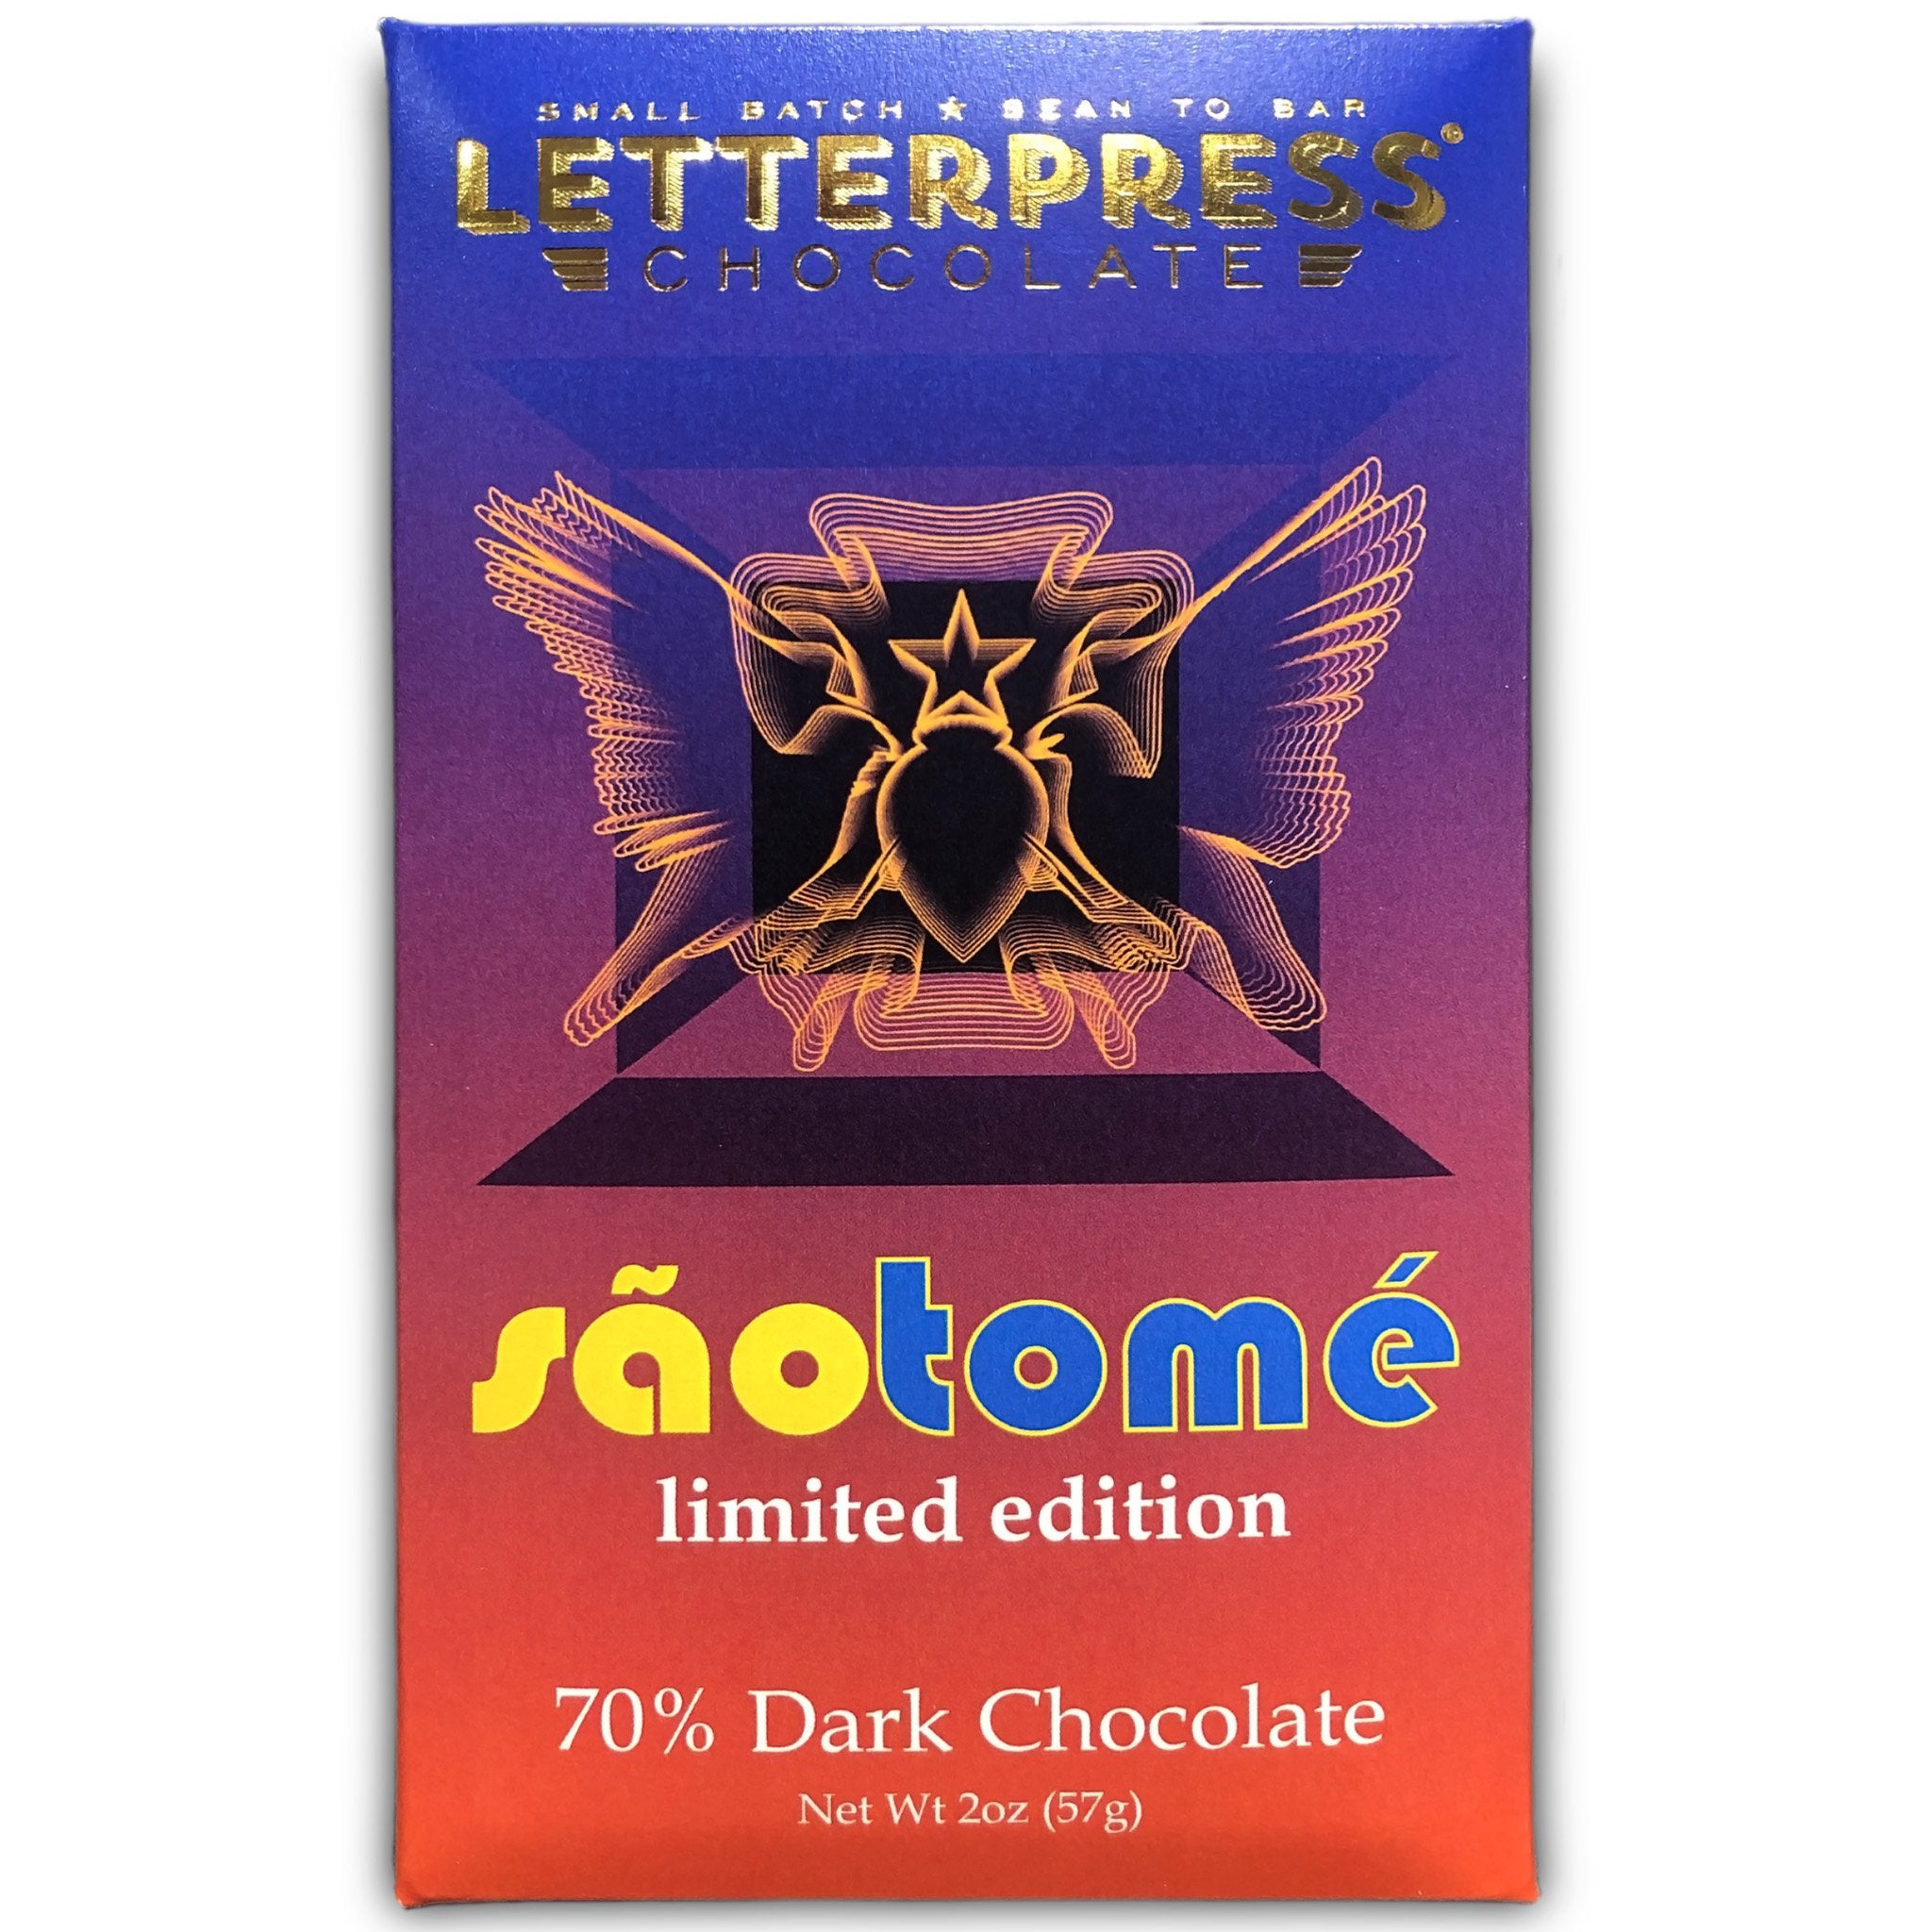 Wholesale - São Tomé Limited Edition, 70% Dark Chocolate Case